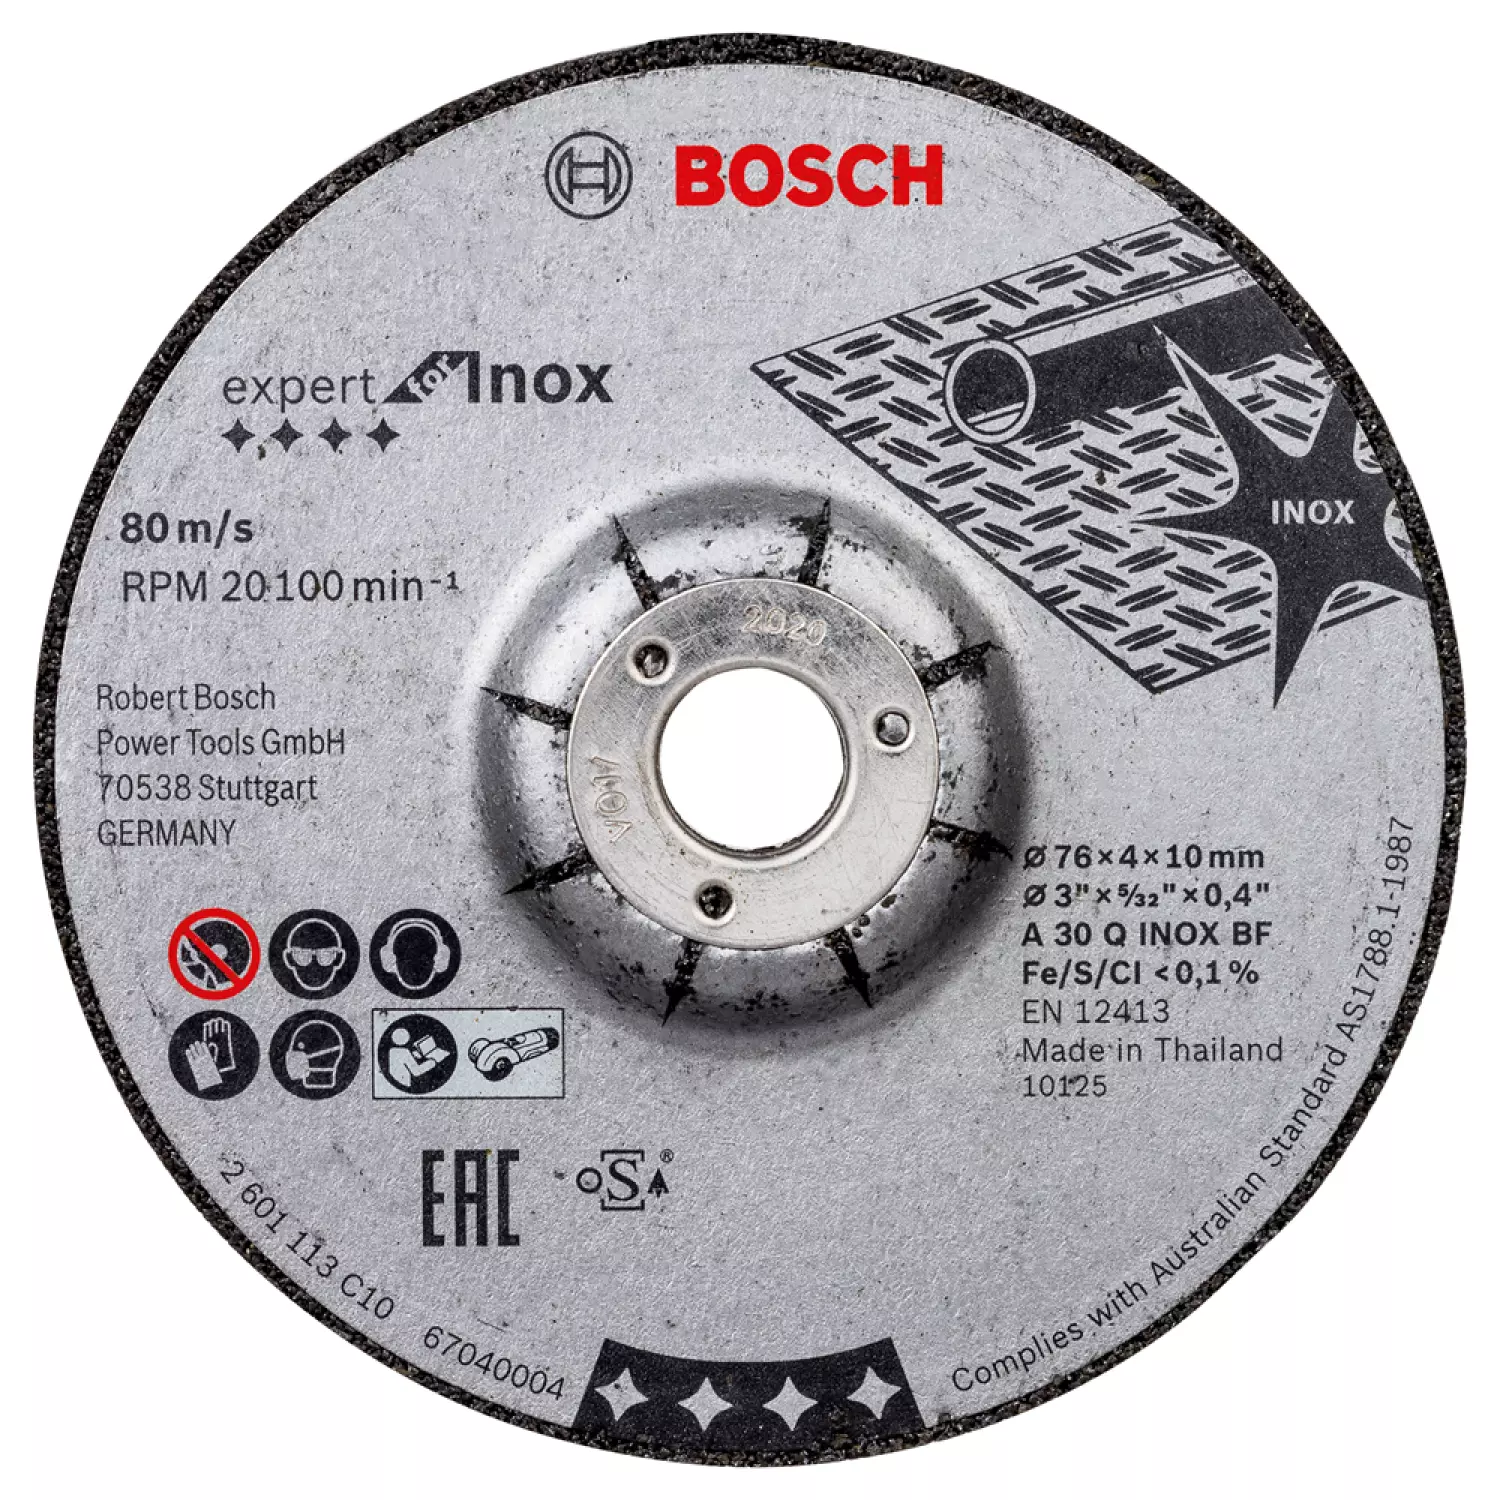 Bosch 2608601705 - Meule à ébarber Expert for Inox A 30 Q, 76 x 4 x 10 mm 2x